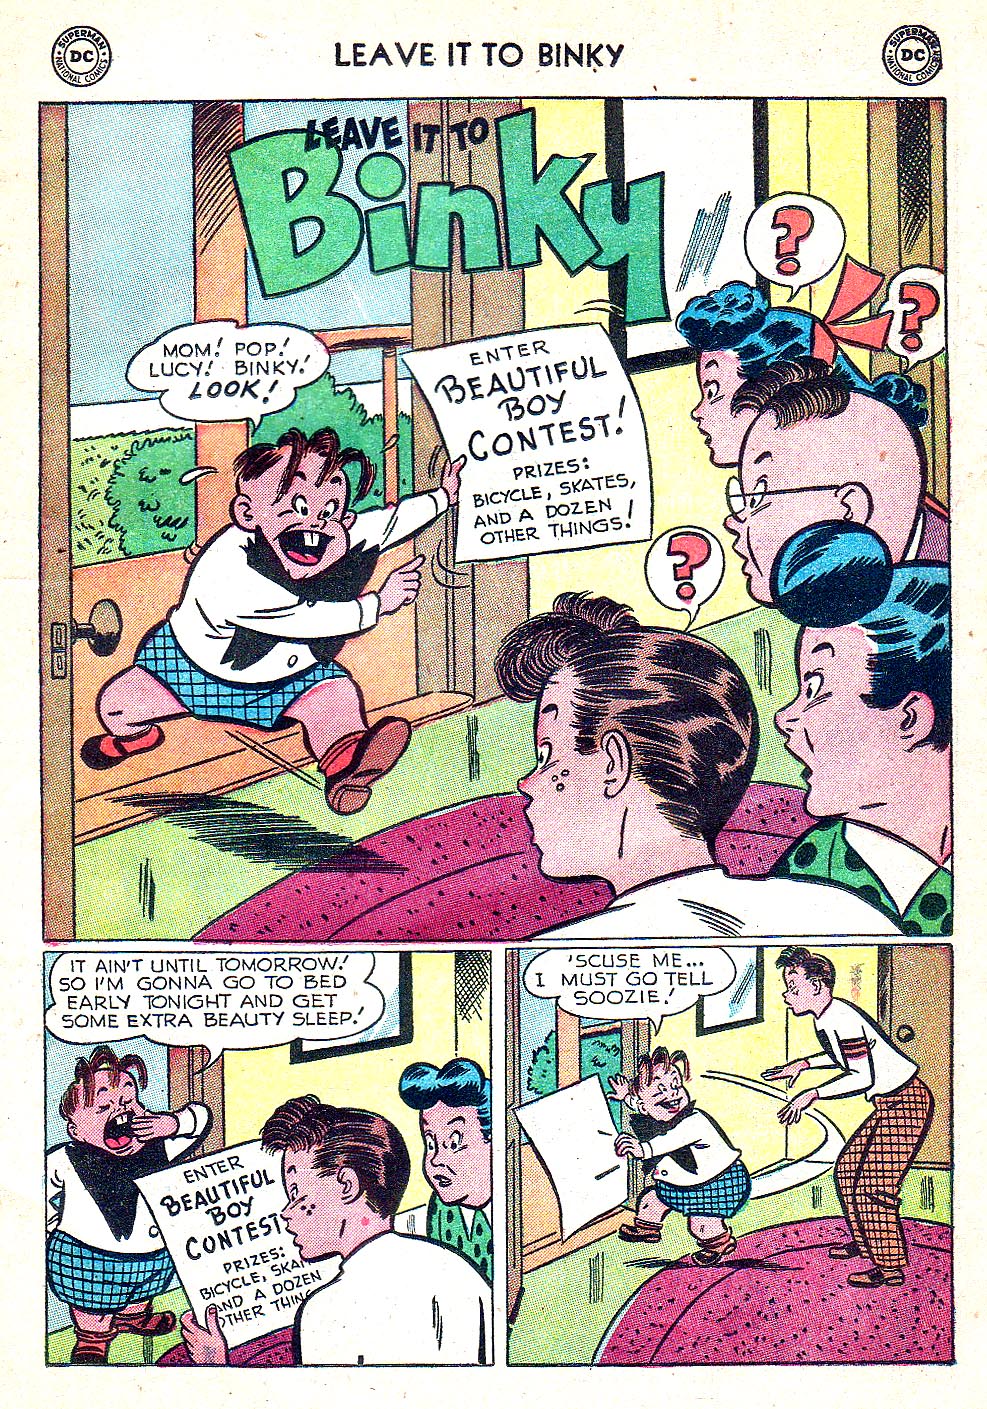 Read online Leave it to Binky comic -  Issue #31 - 13